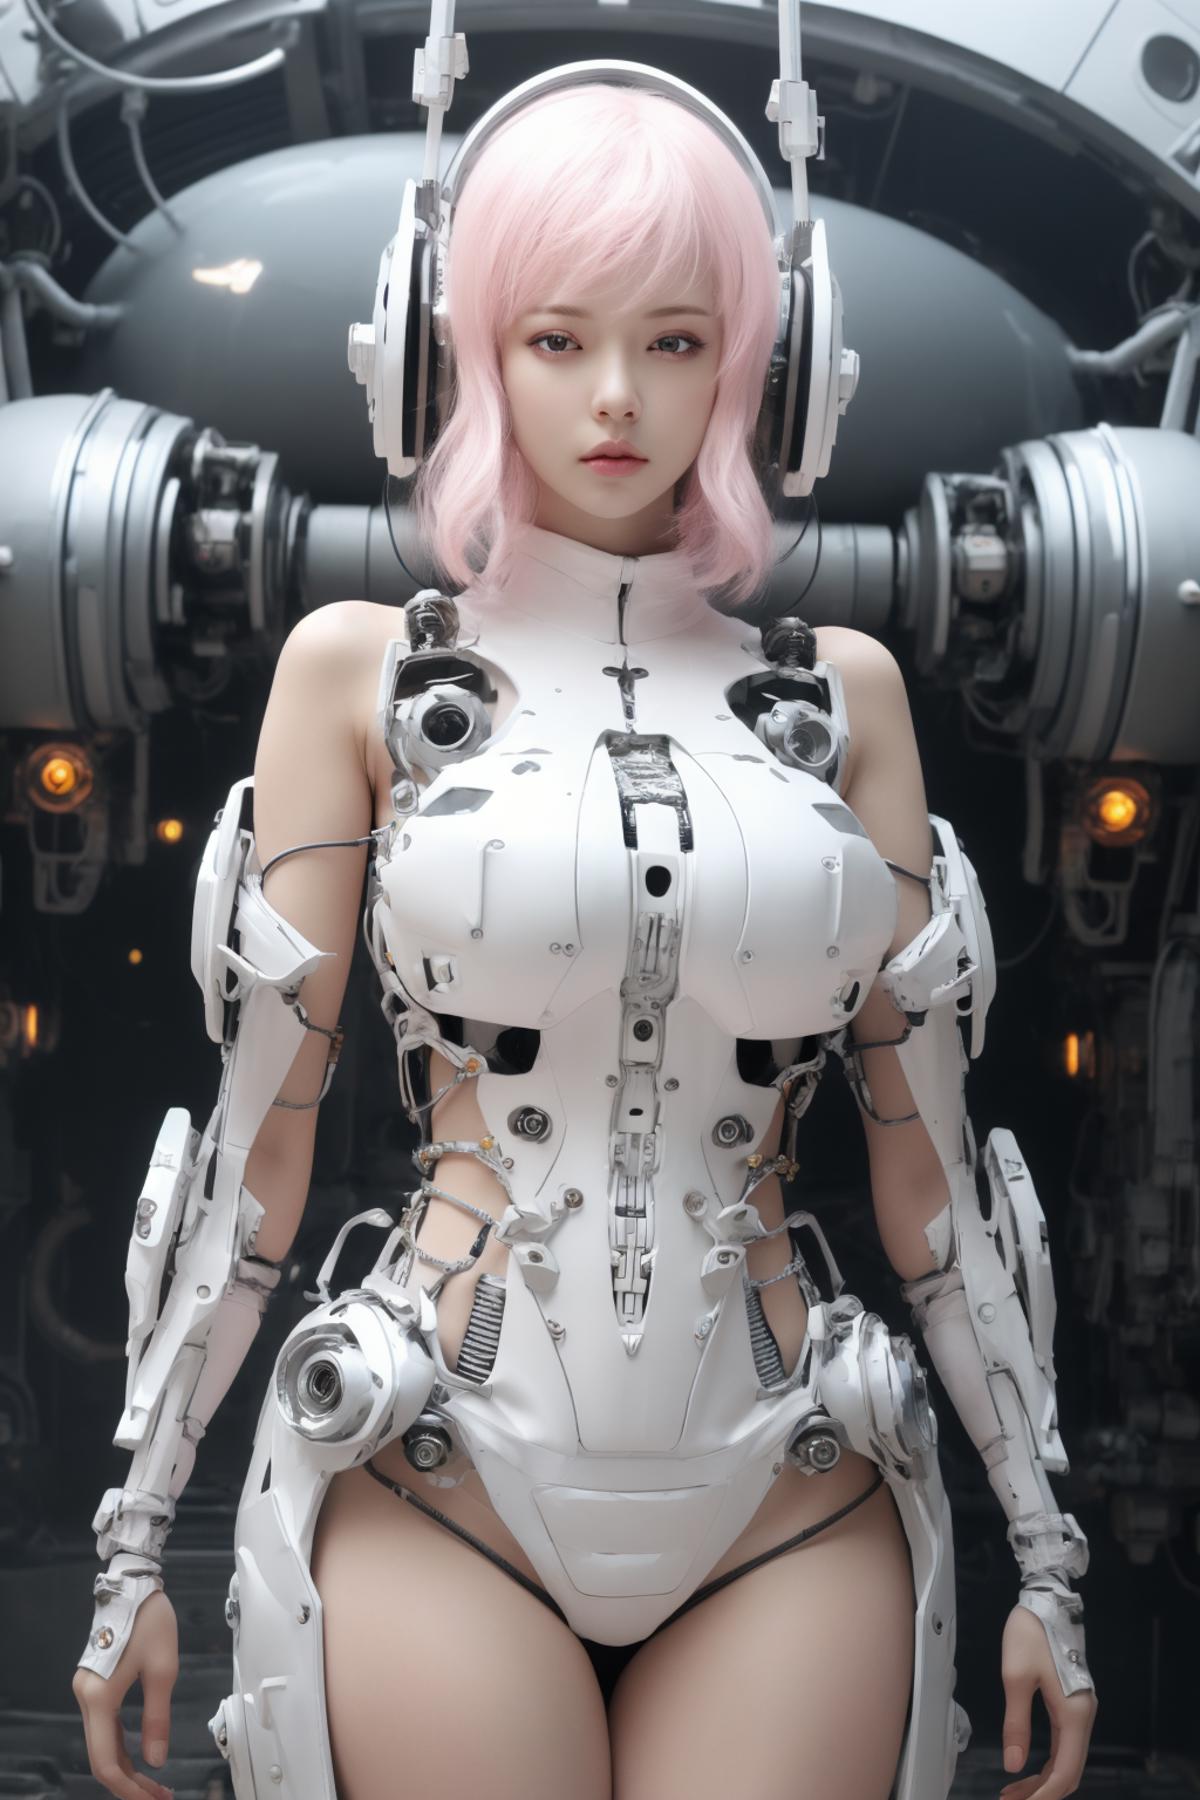 AI model image by joyy114